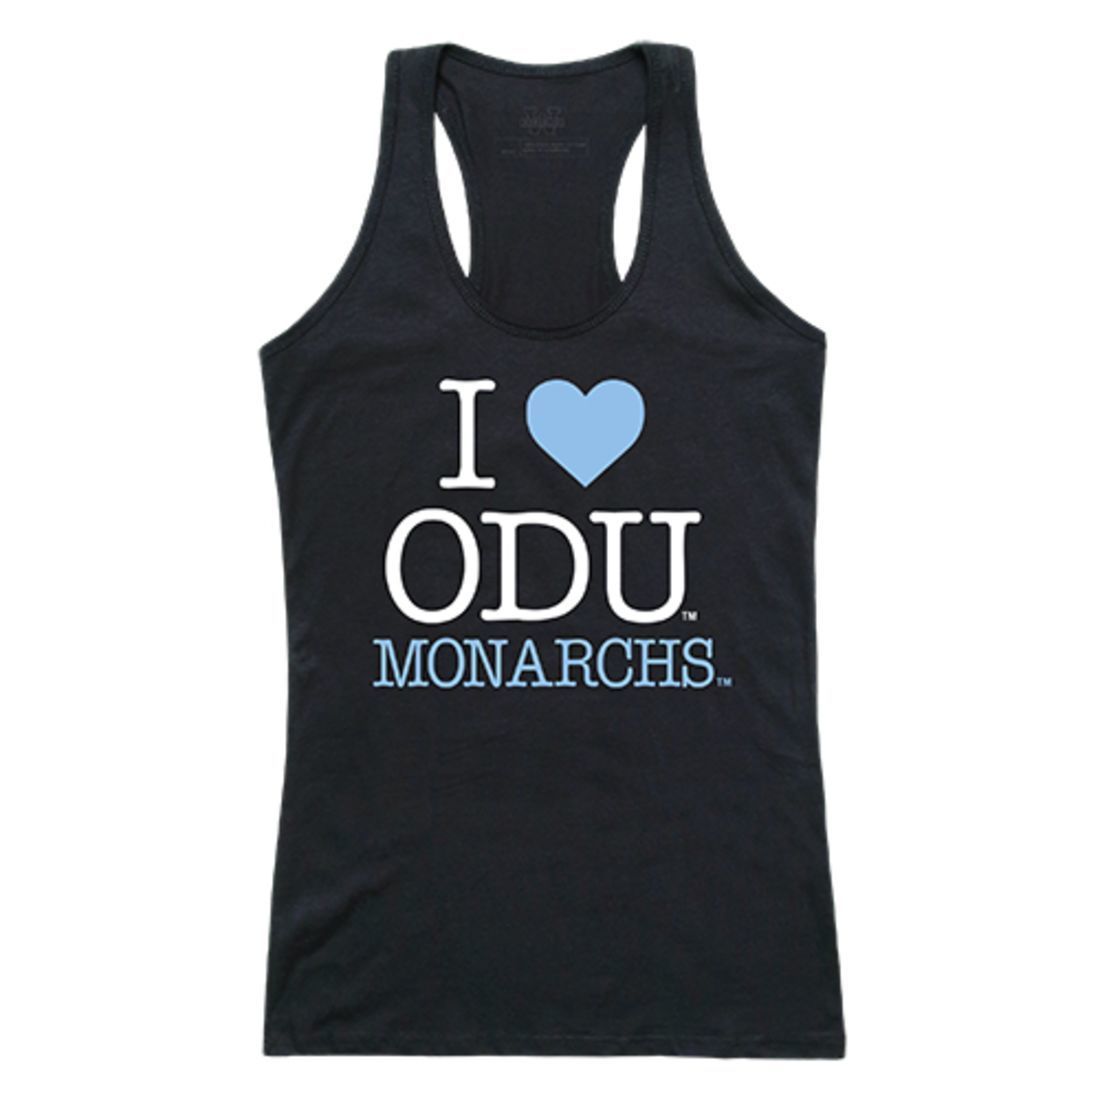 ODU Old Dominion University Monarchs Womens Love Tank Top Tee T-Shirt Black-Campus-Wardrobe